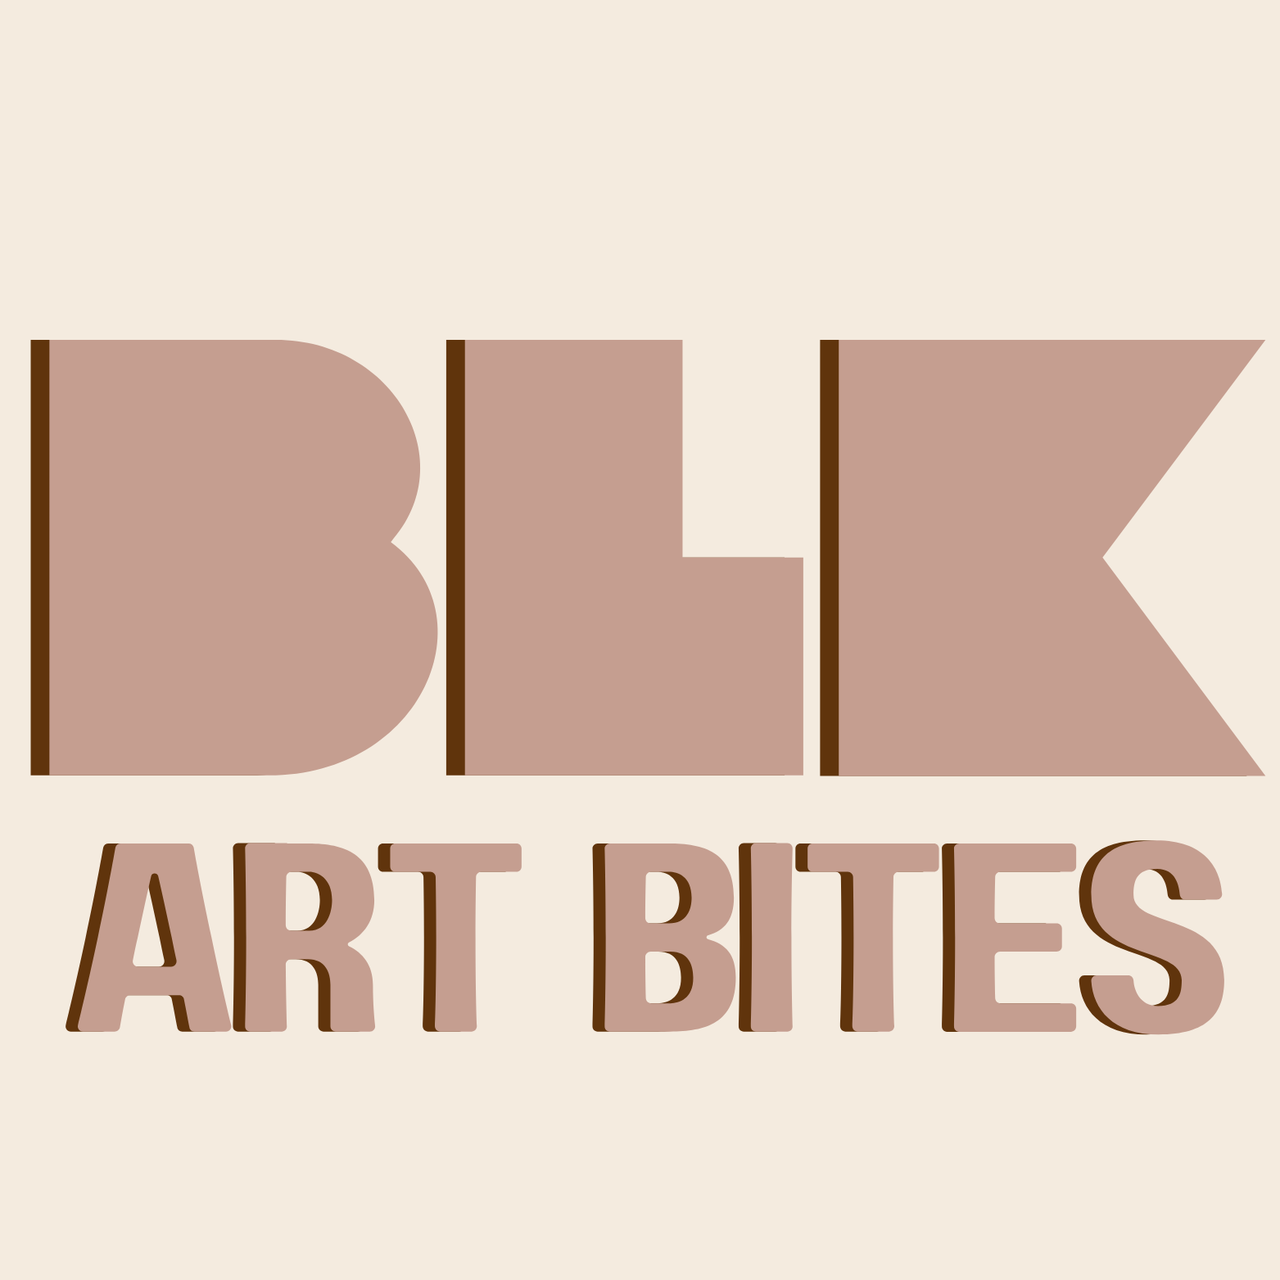 Life+Times: BLK ART BITES